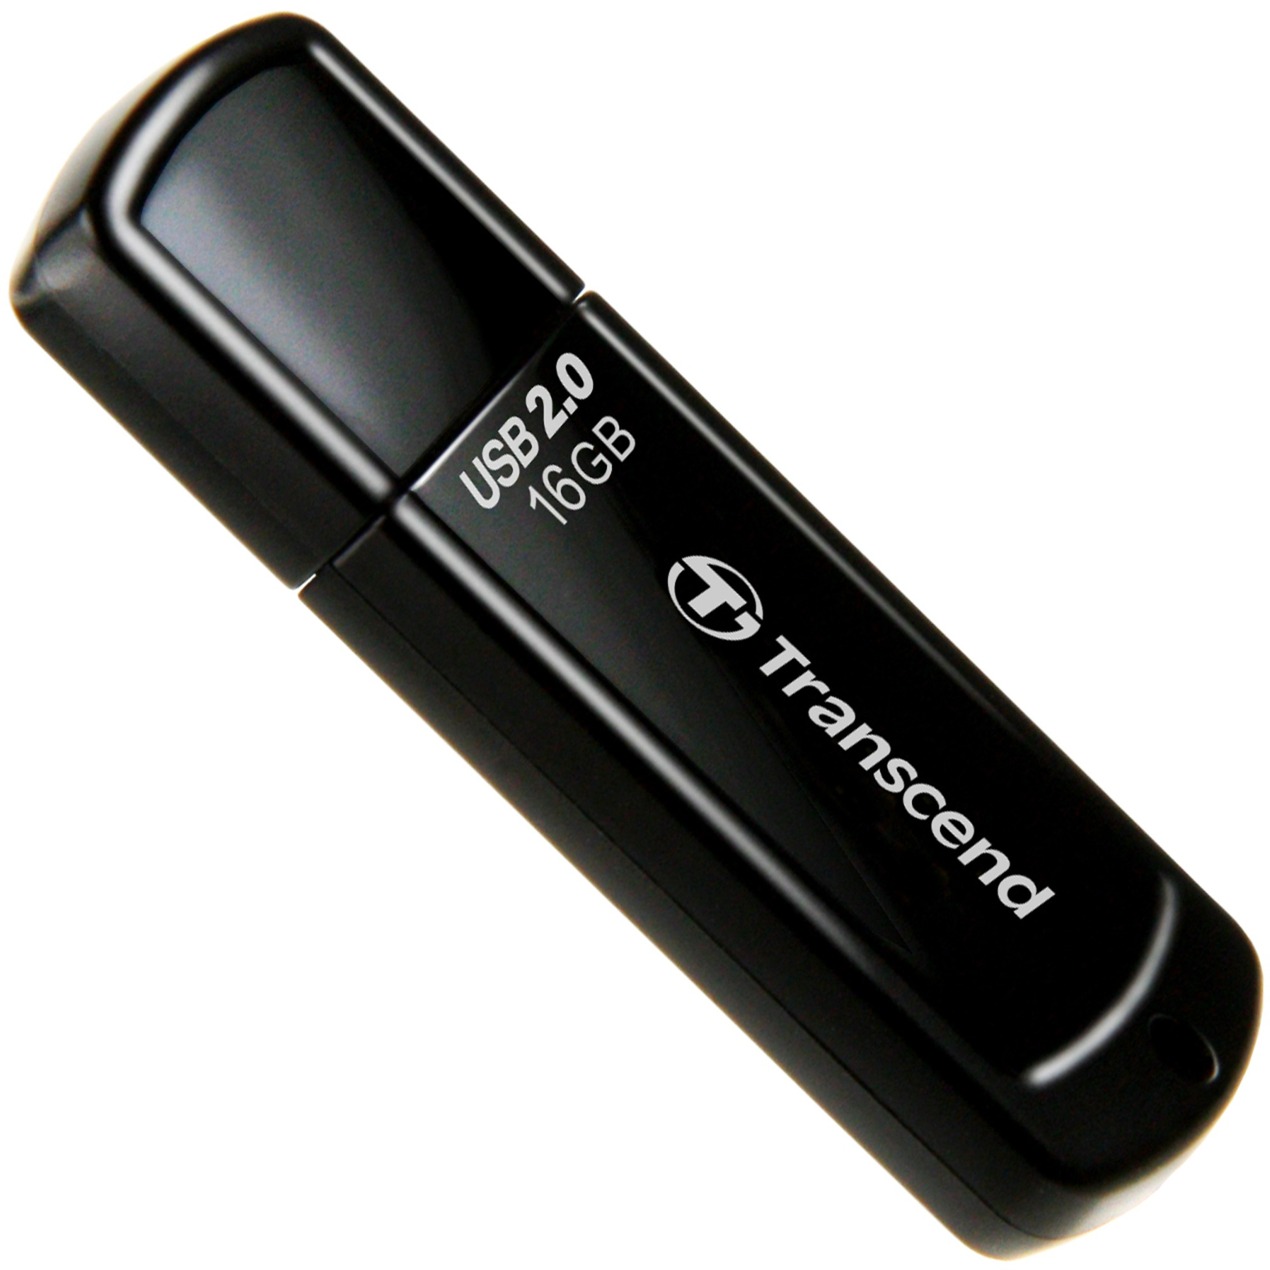 JetFlash 350 16 GB, USB-Stick von Transcend